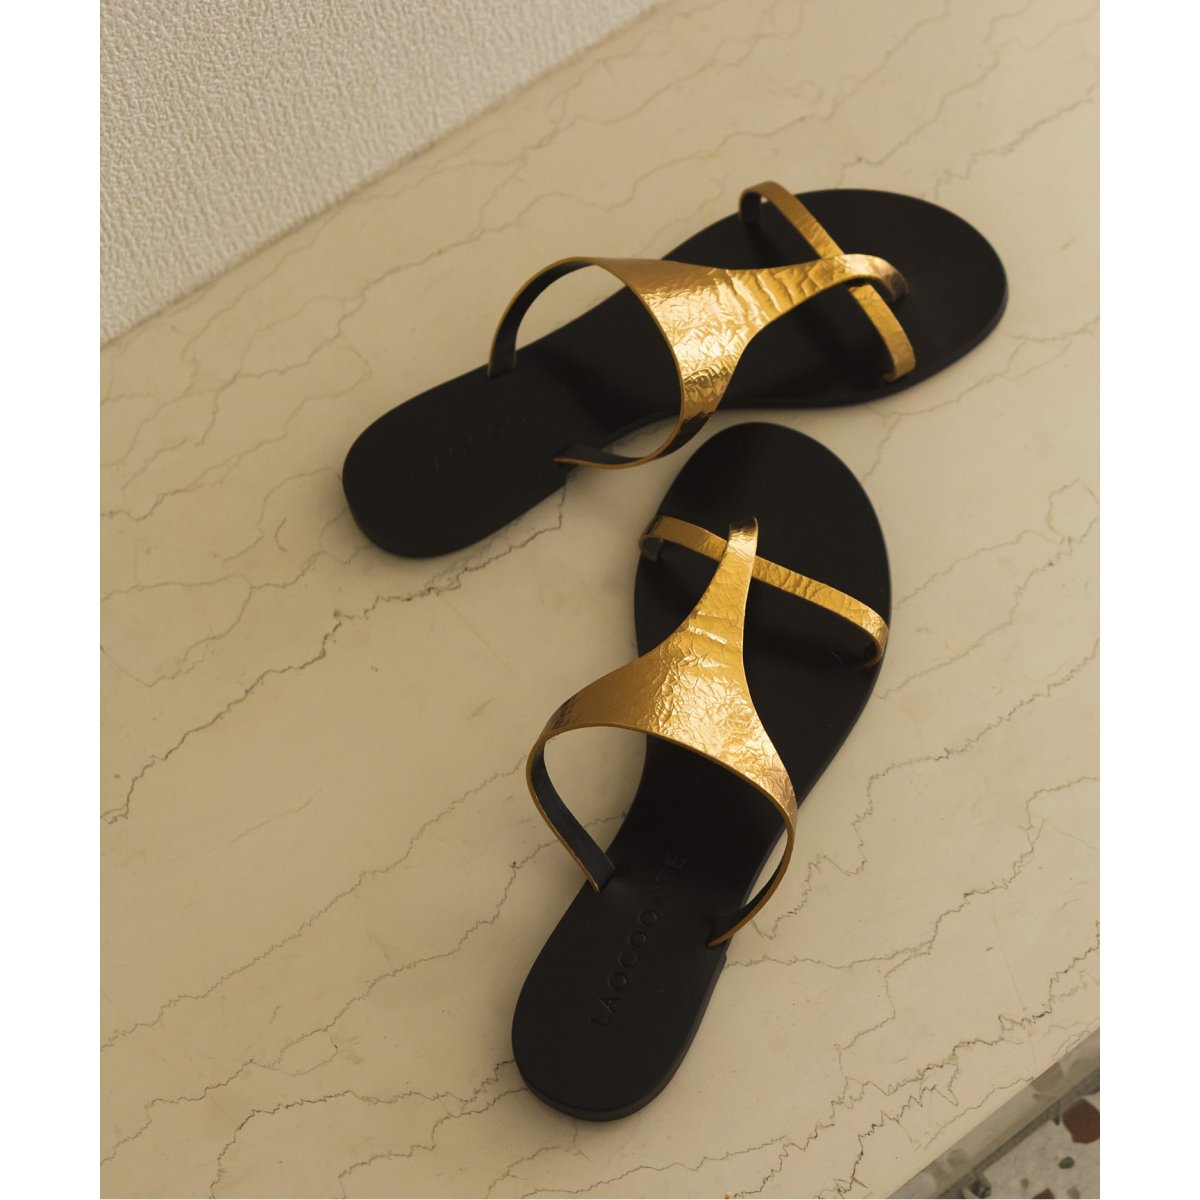 LAOCOONTE(ラオコンテ)】ALEA Cracked Sandals | ユー バイ スピック